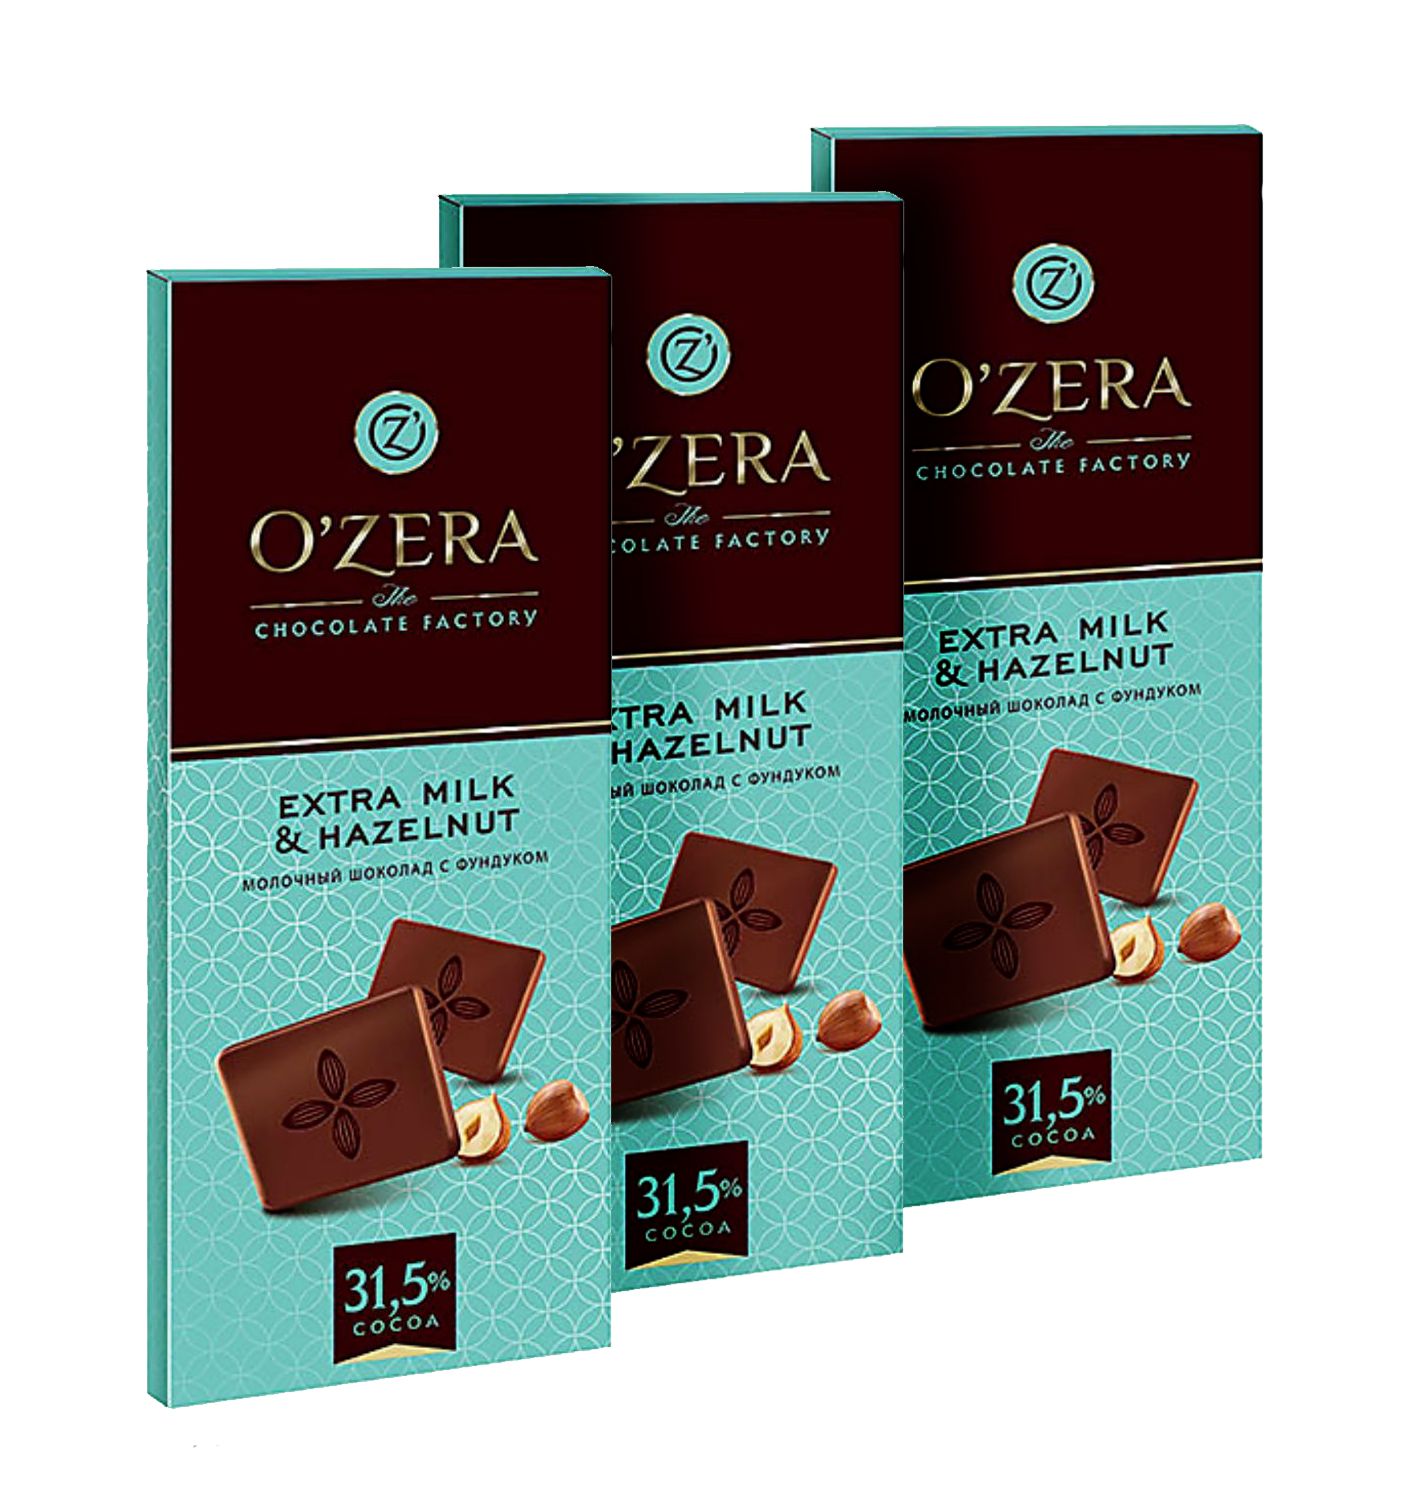 Ozera батончик. Шоколад Ozera Extra Milk Hazelnut 90г. Шоколад молочный o'Zera Extra Milk & Hazelnut 90г. Шоколад o'Zera "Milk & Extra Hazelnut". Молочный шоколад Ozera Extra Milk haz 90г/15шт.